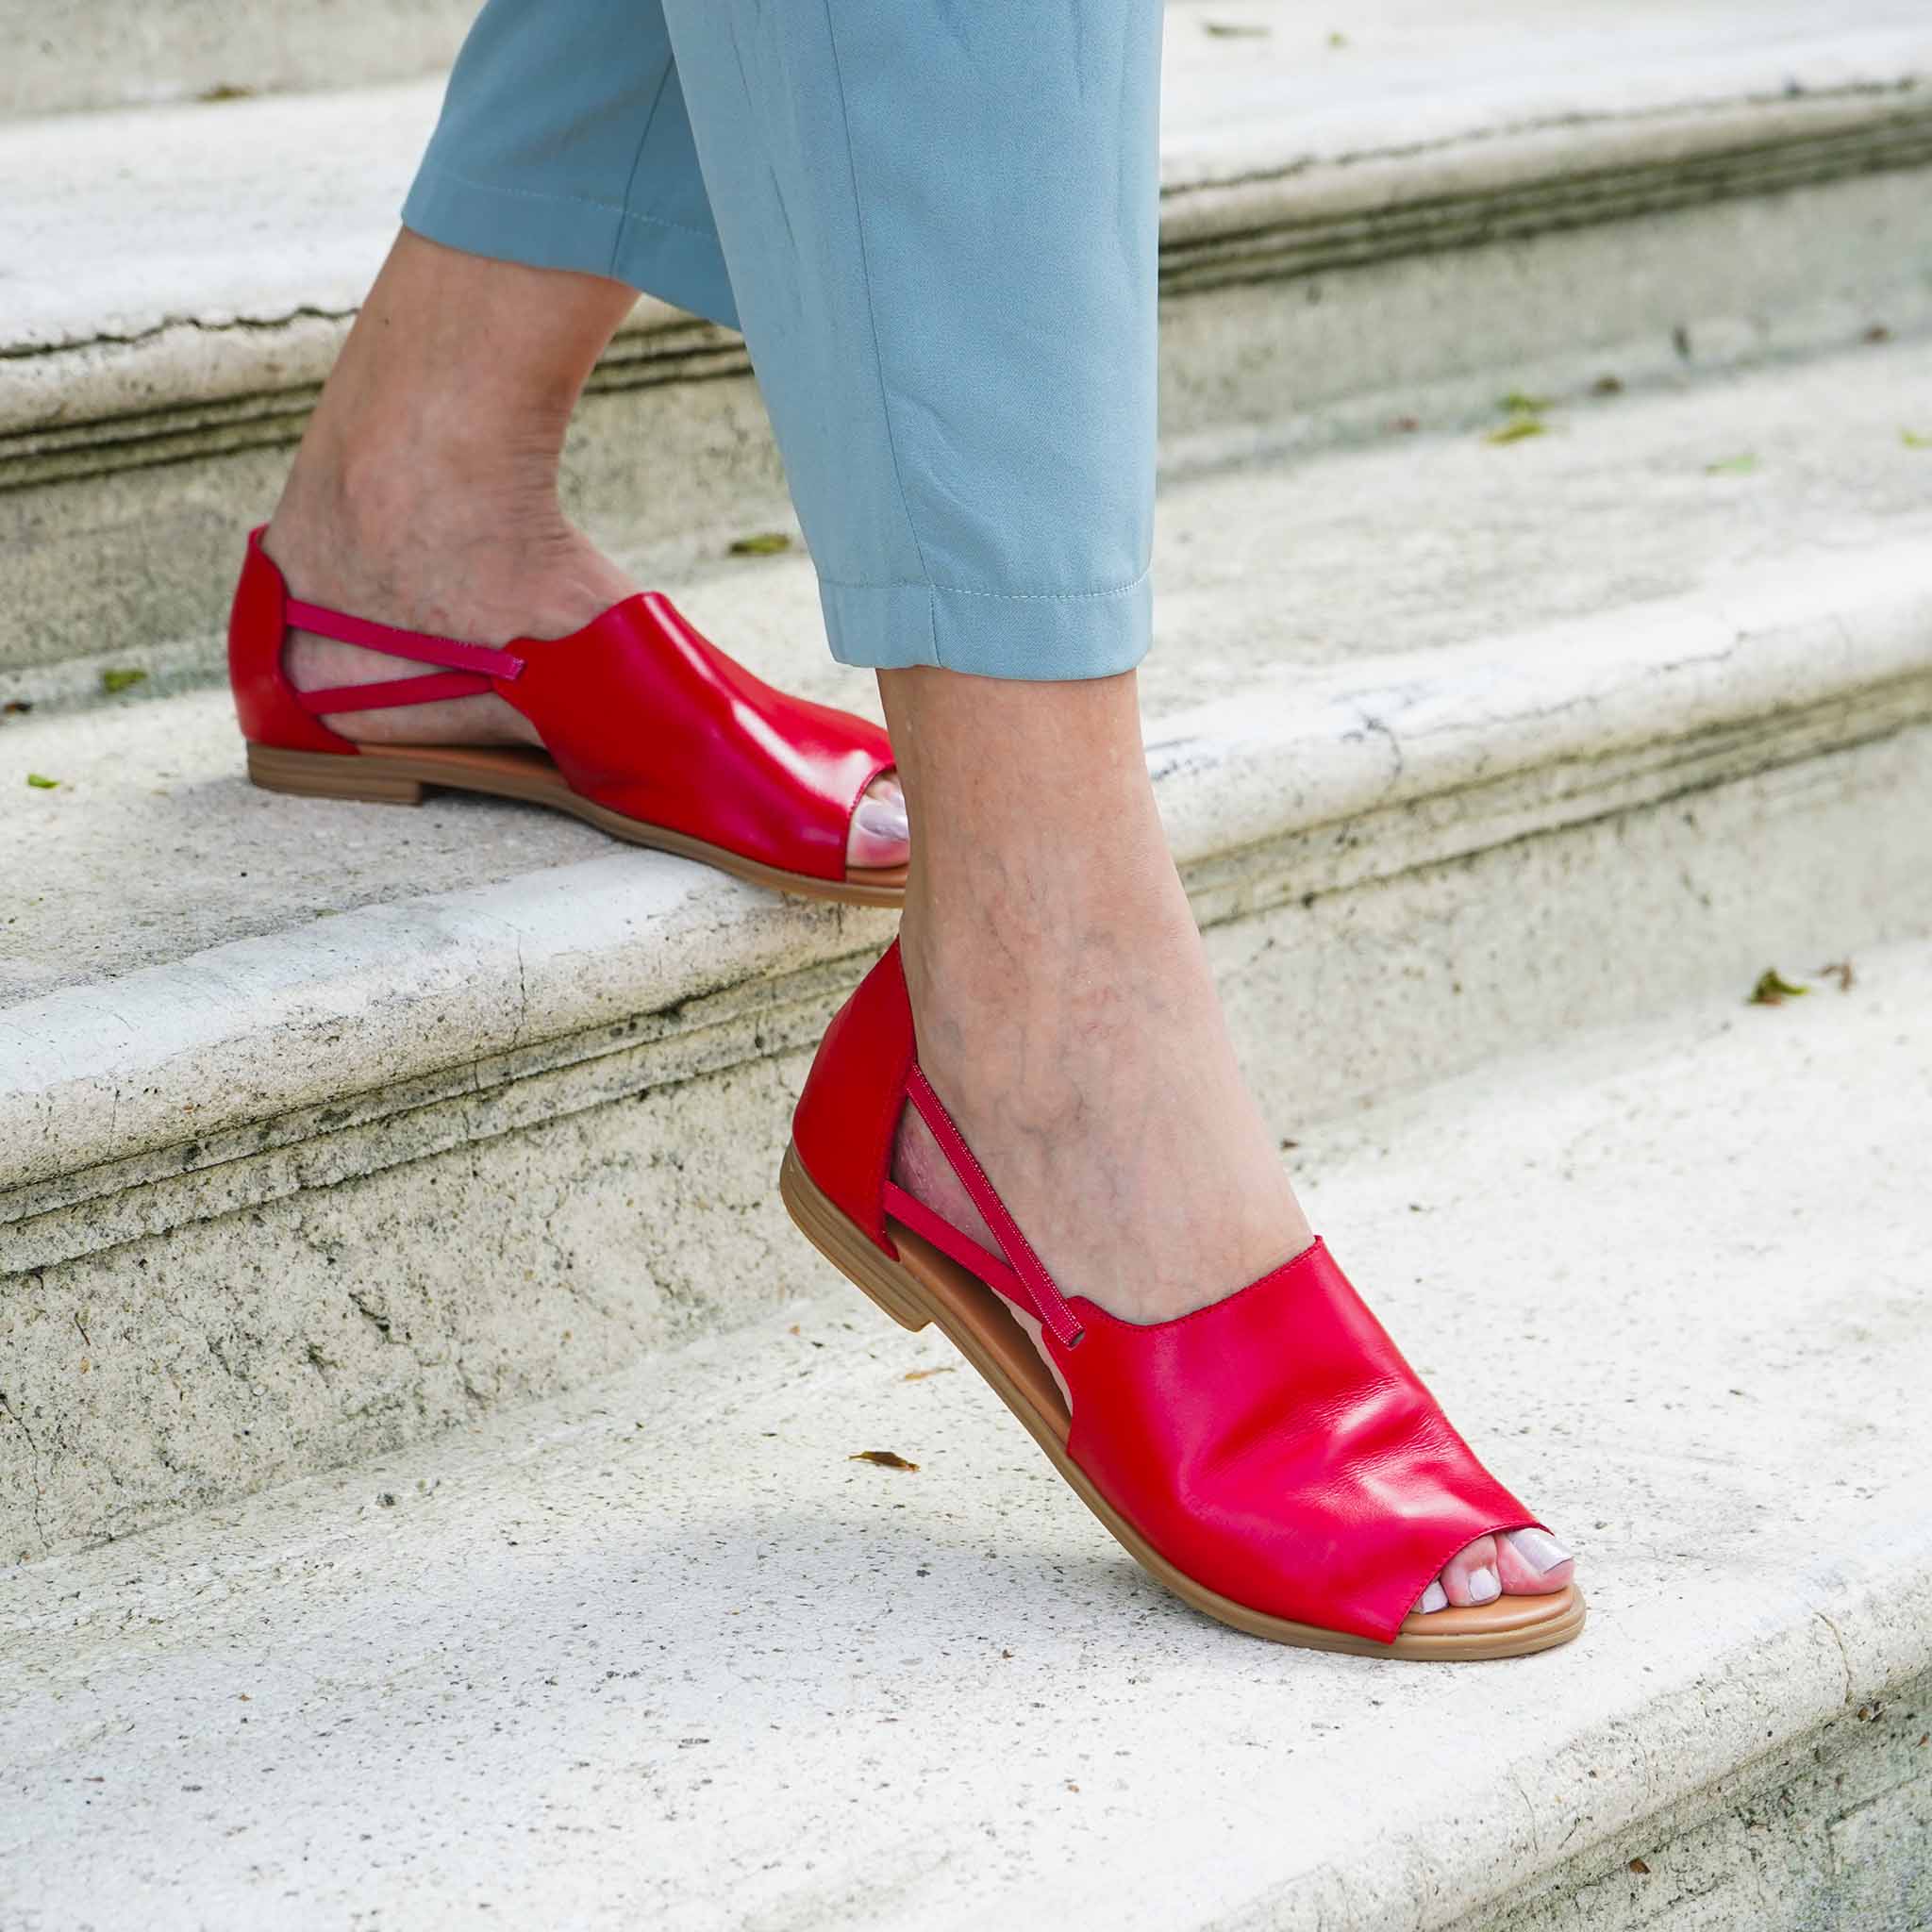 Red Wedding Shoes: 24 Ideas For Fashion-Forward Brides + FAQs